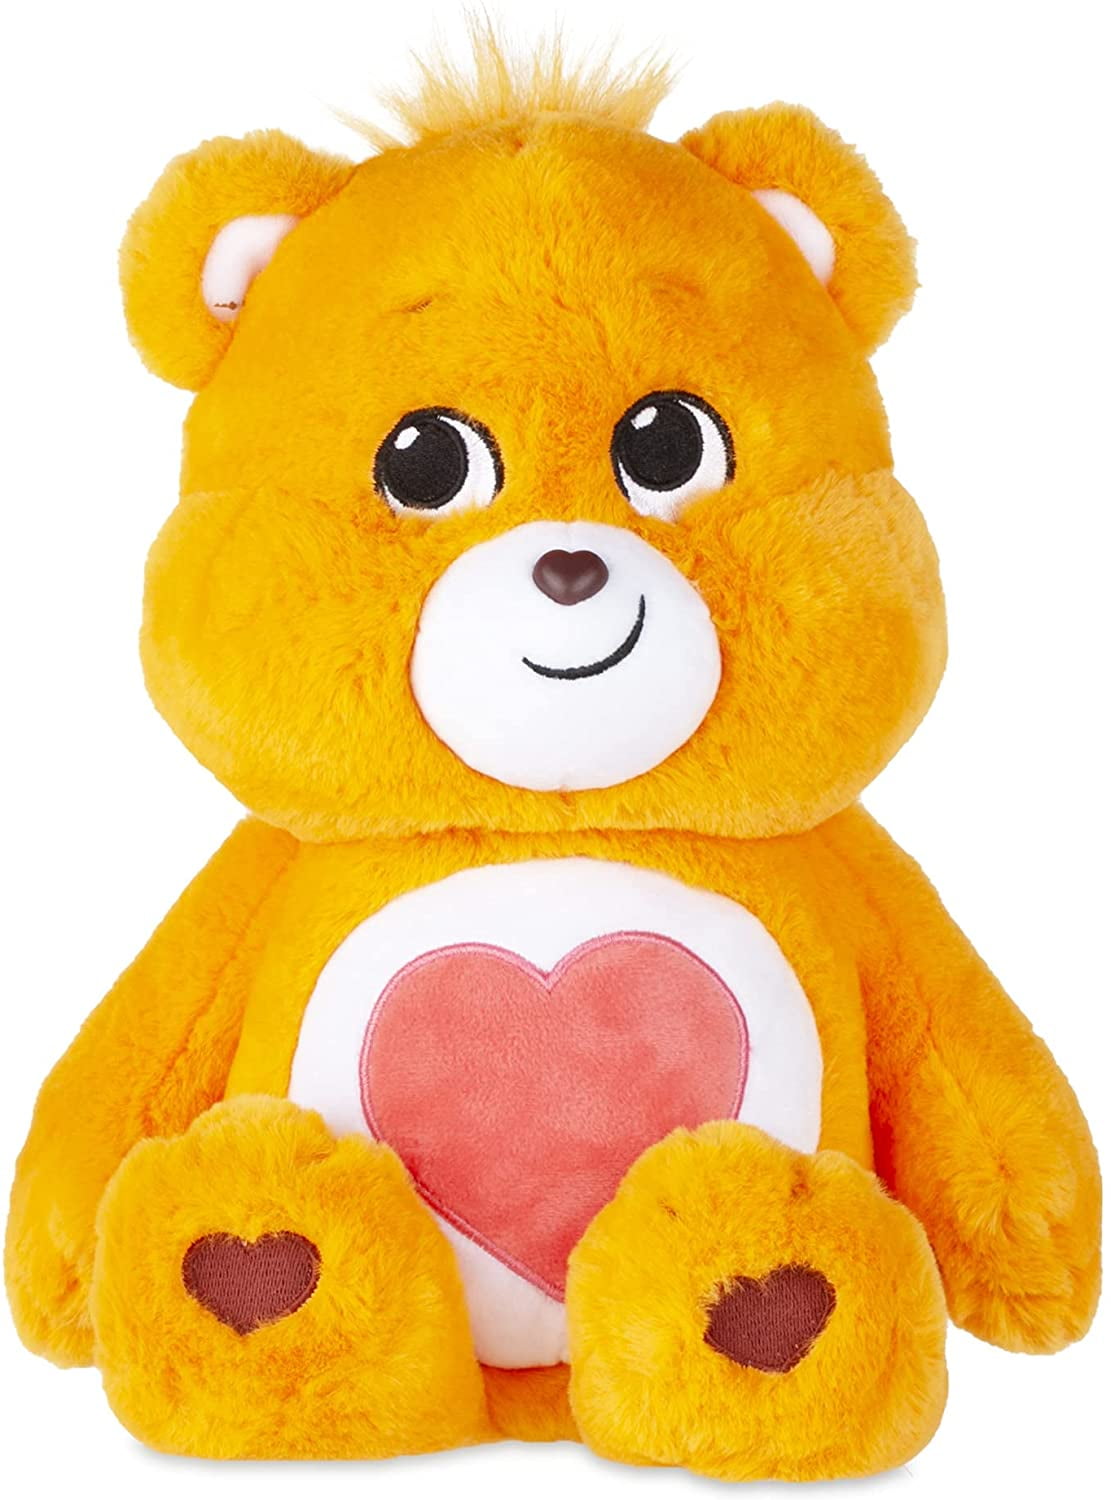 Care Bears Tenderheart Bear Stuffed Animal, 14 inches - Walmart.com